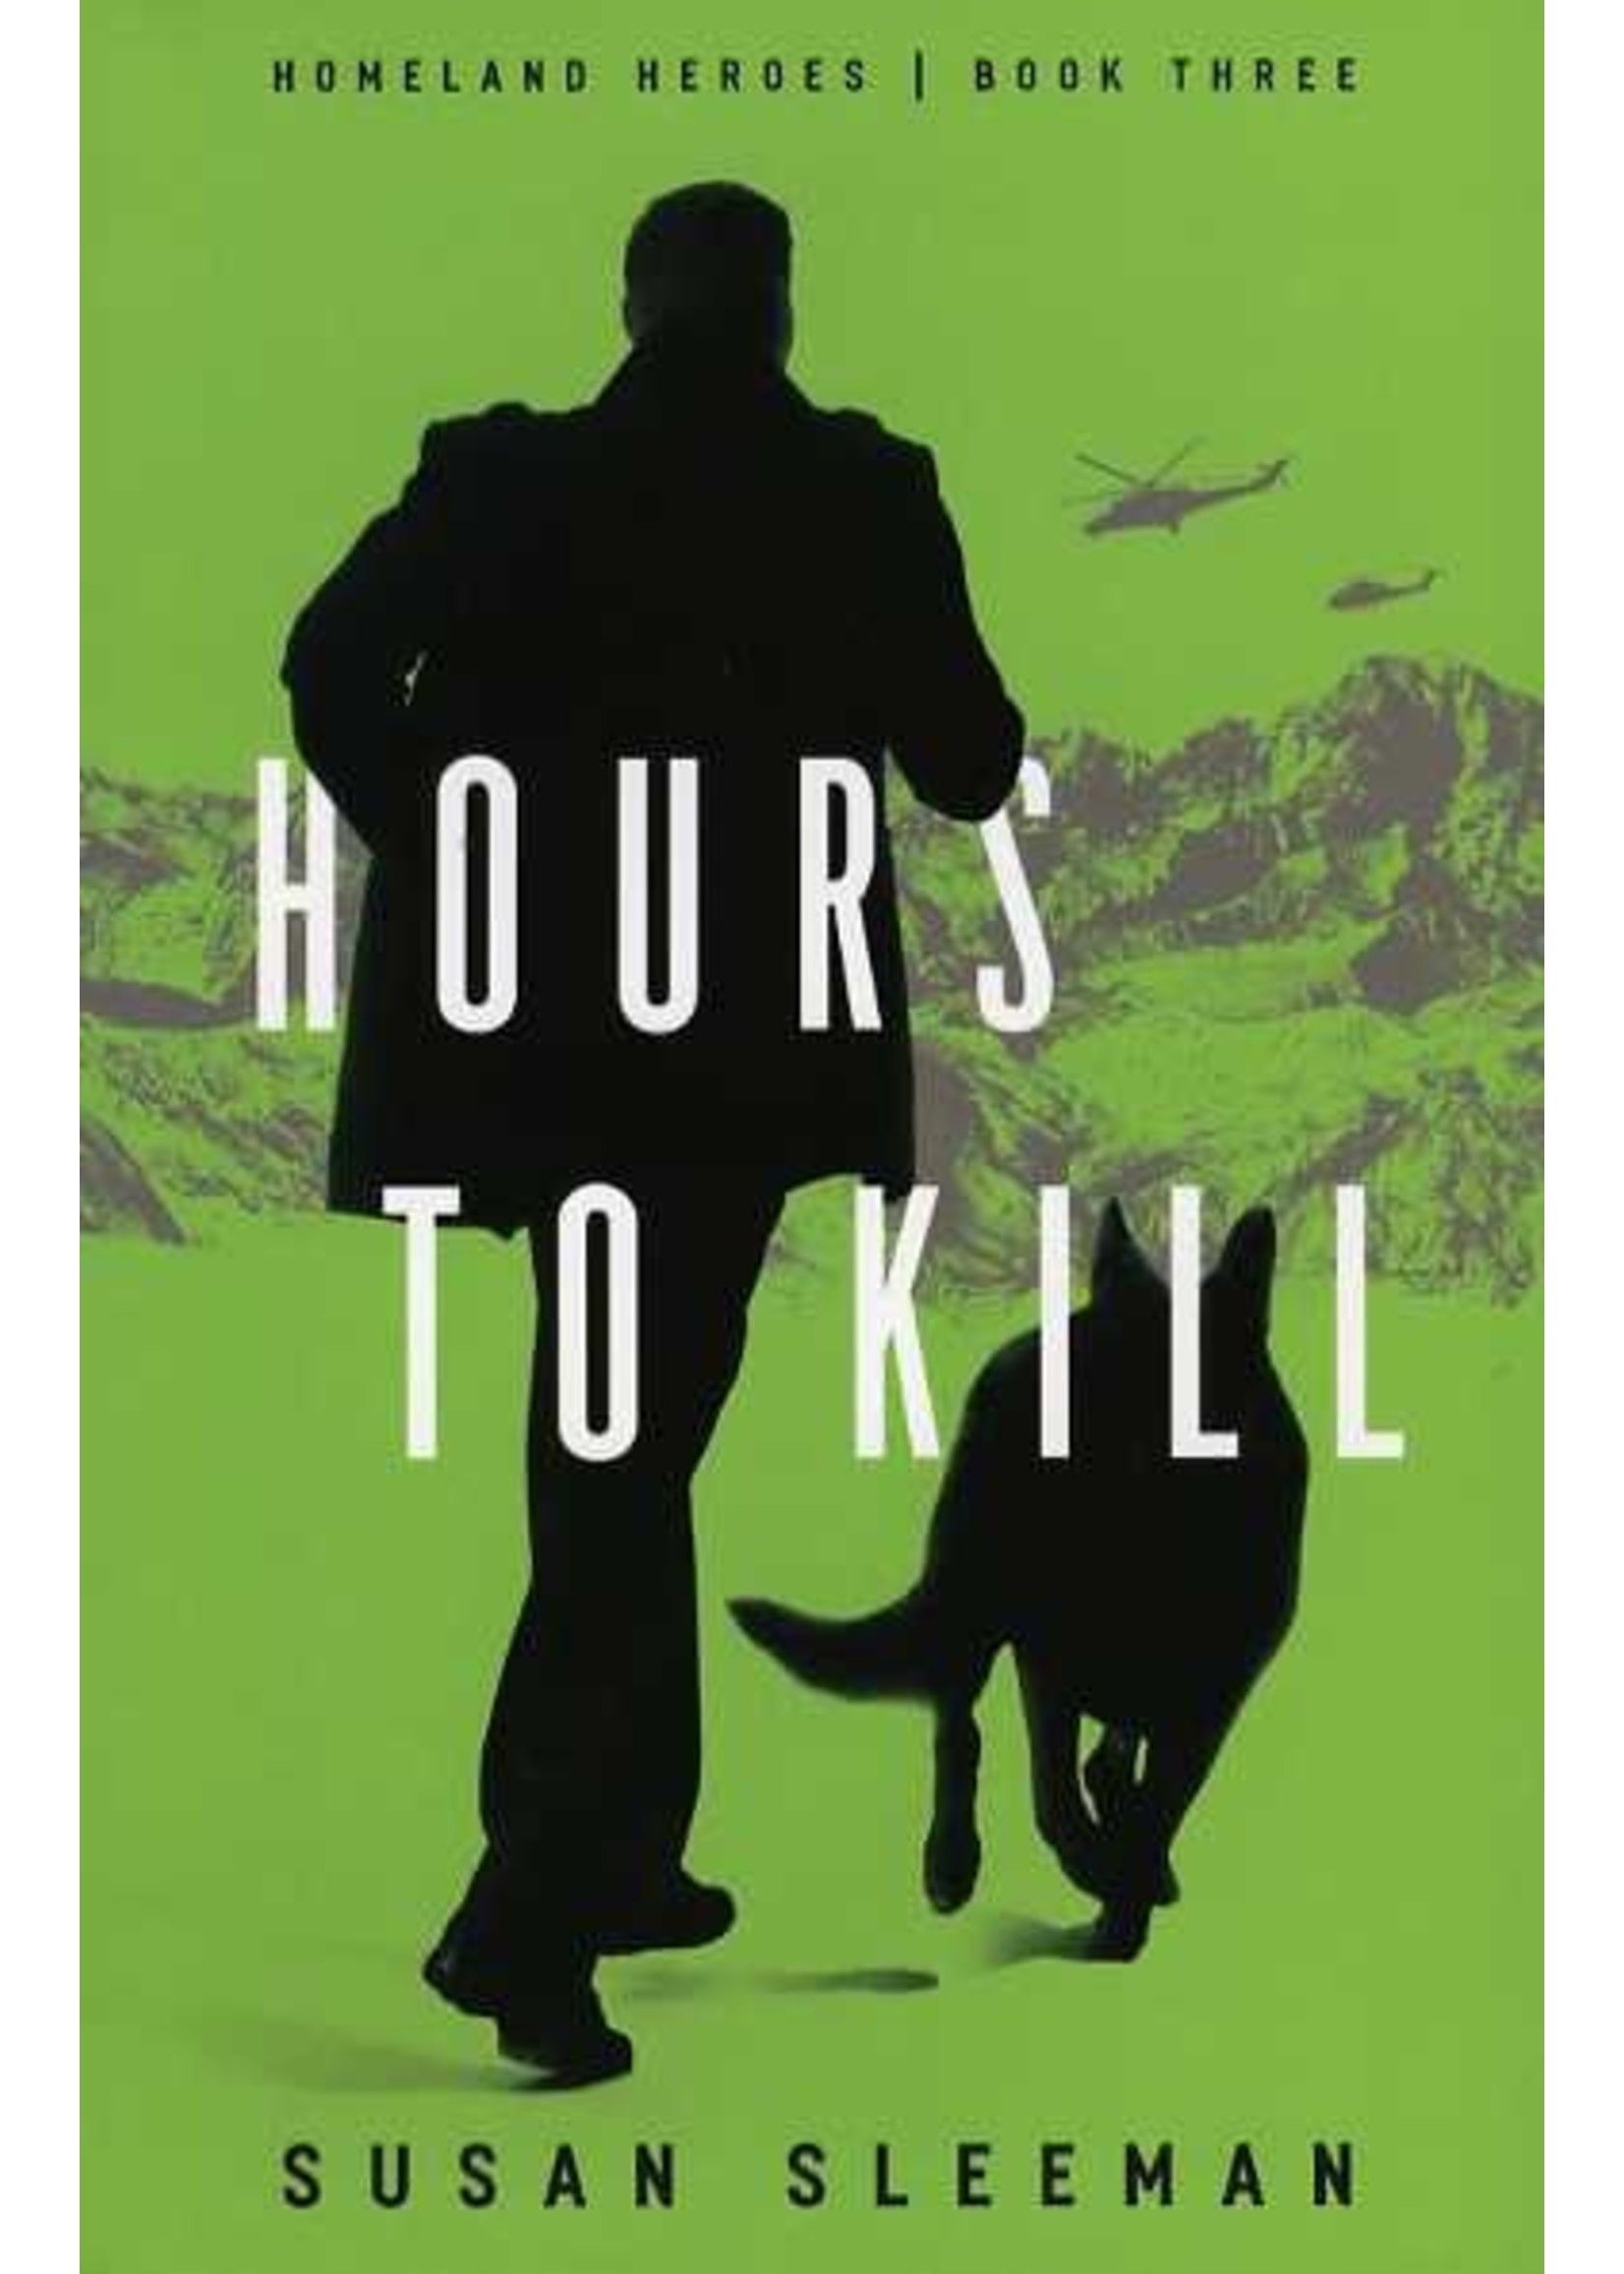 Bethany House Hours to Kill (Homeland Heroes 3) - Susan Sleeman